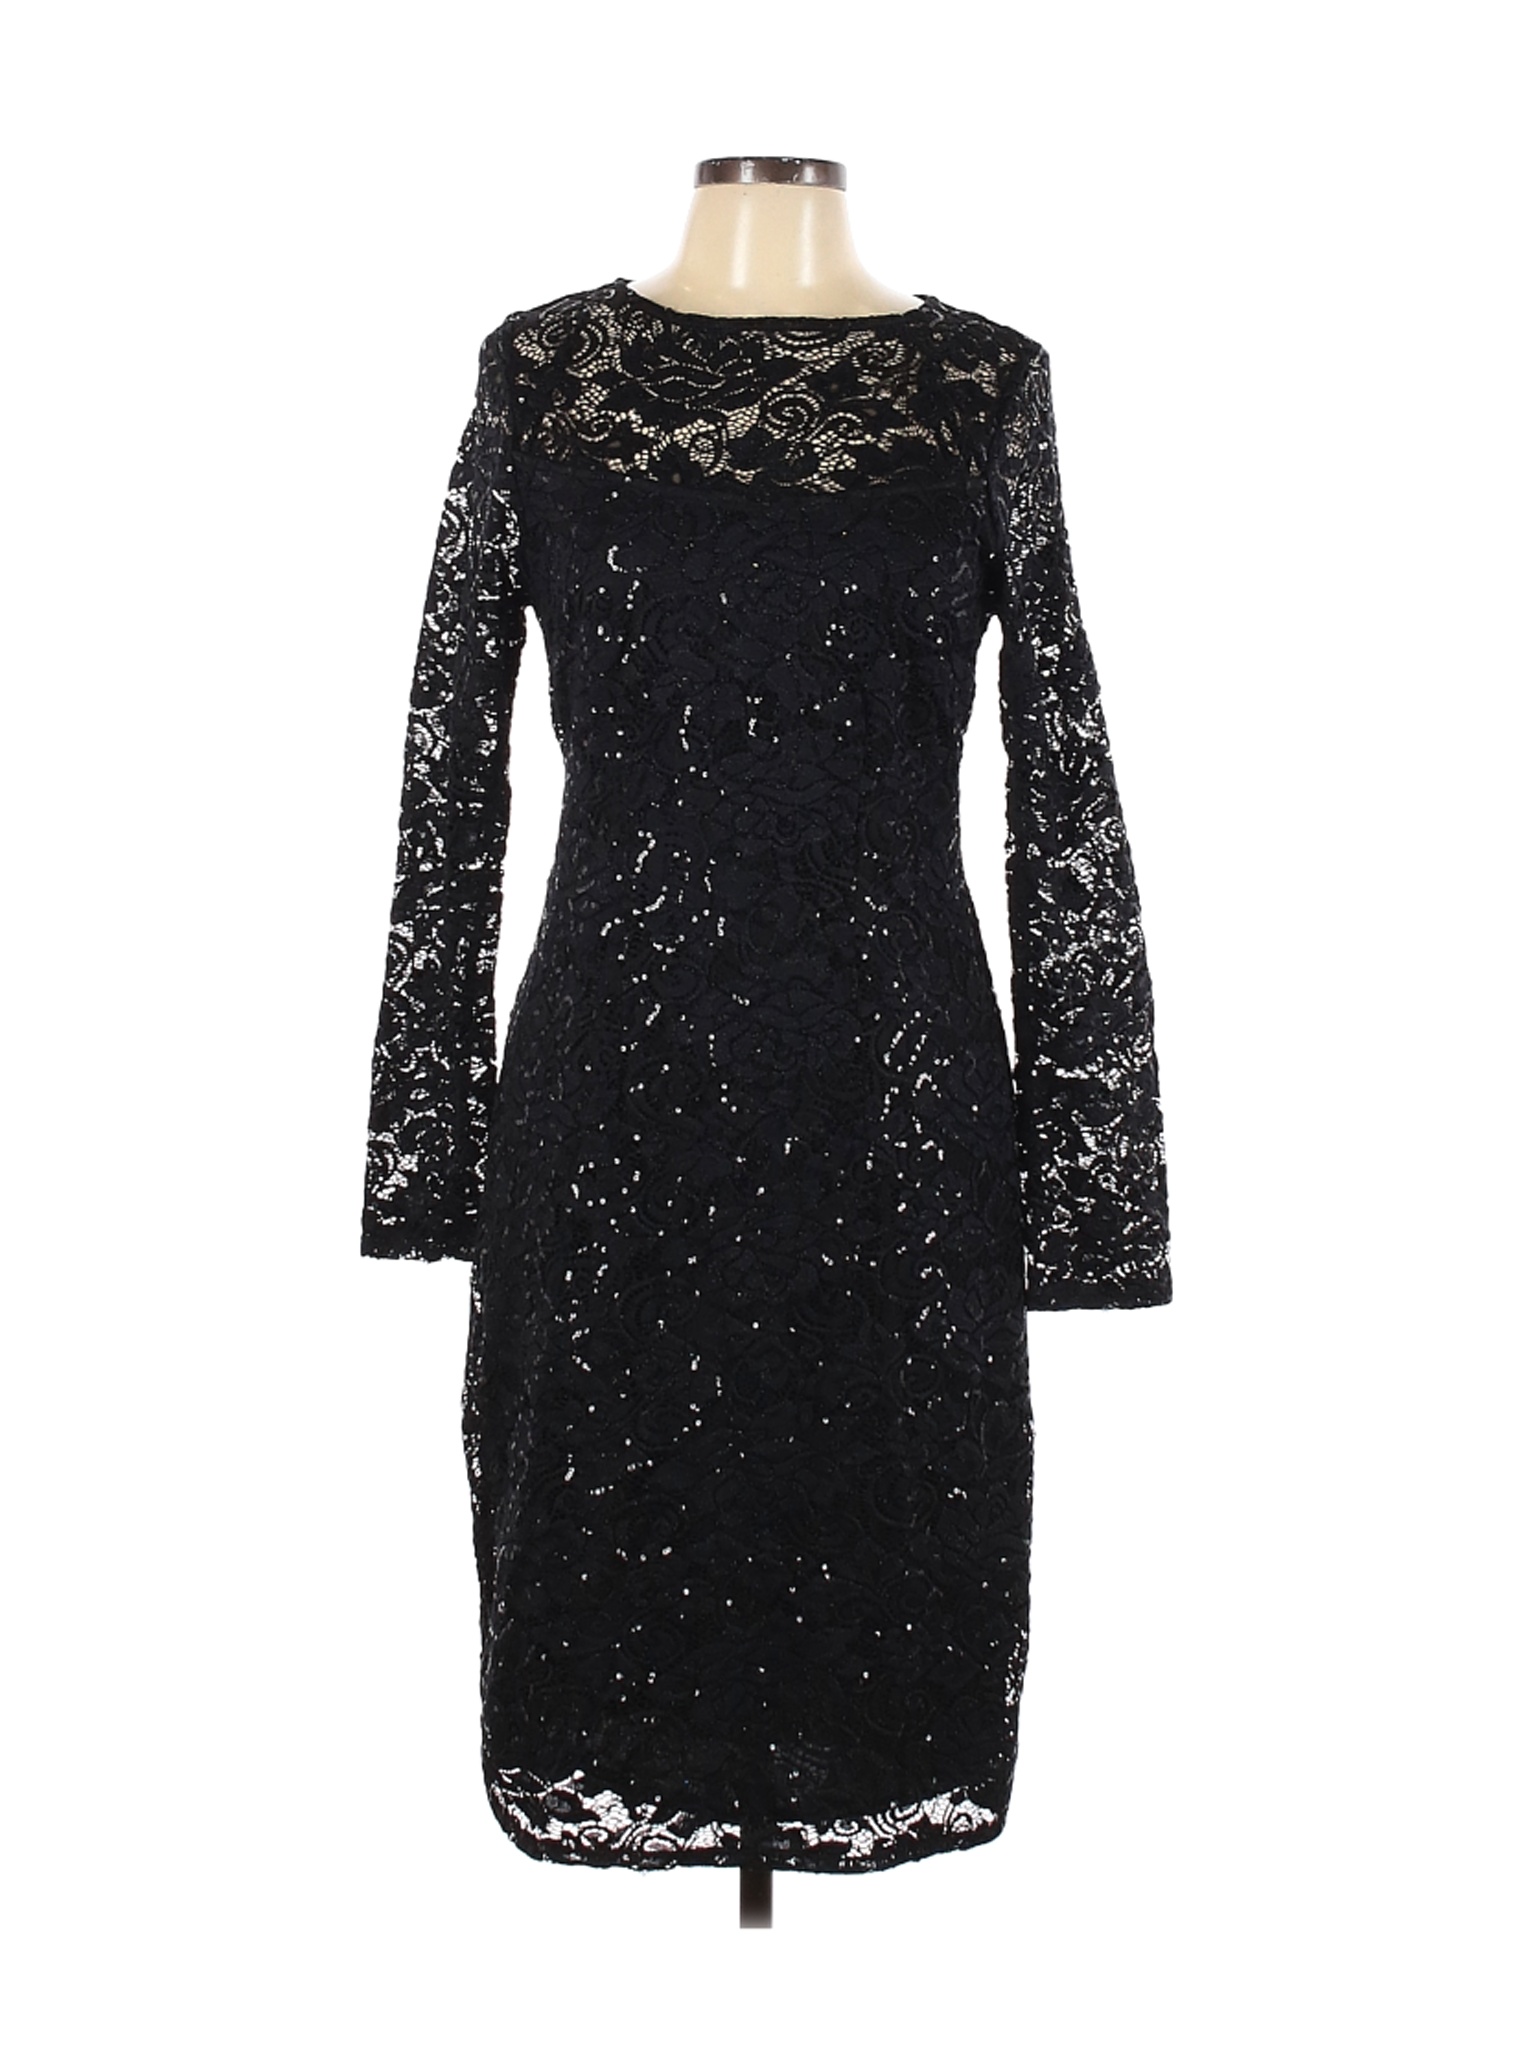 Marina Women Black Cocktail Dress 12 | eBay